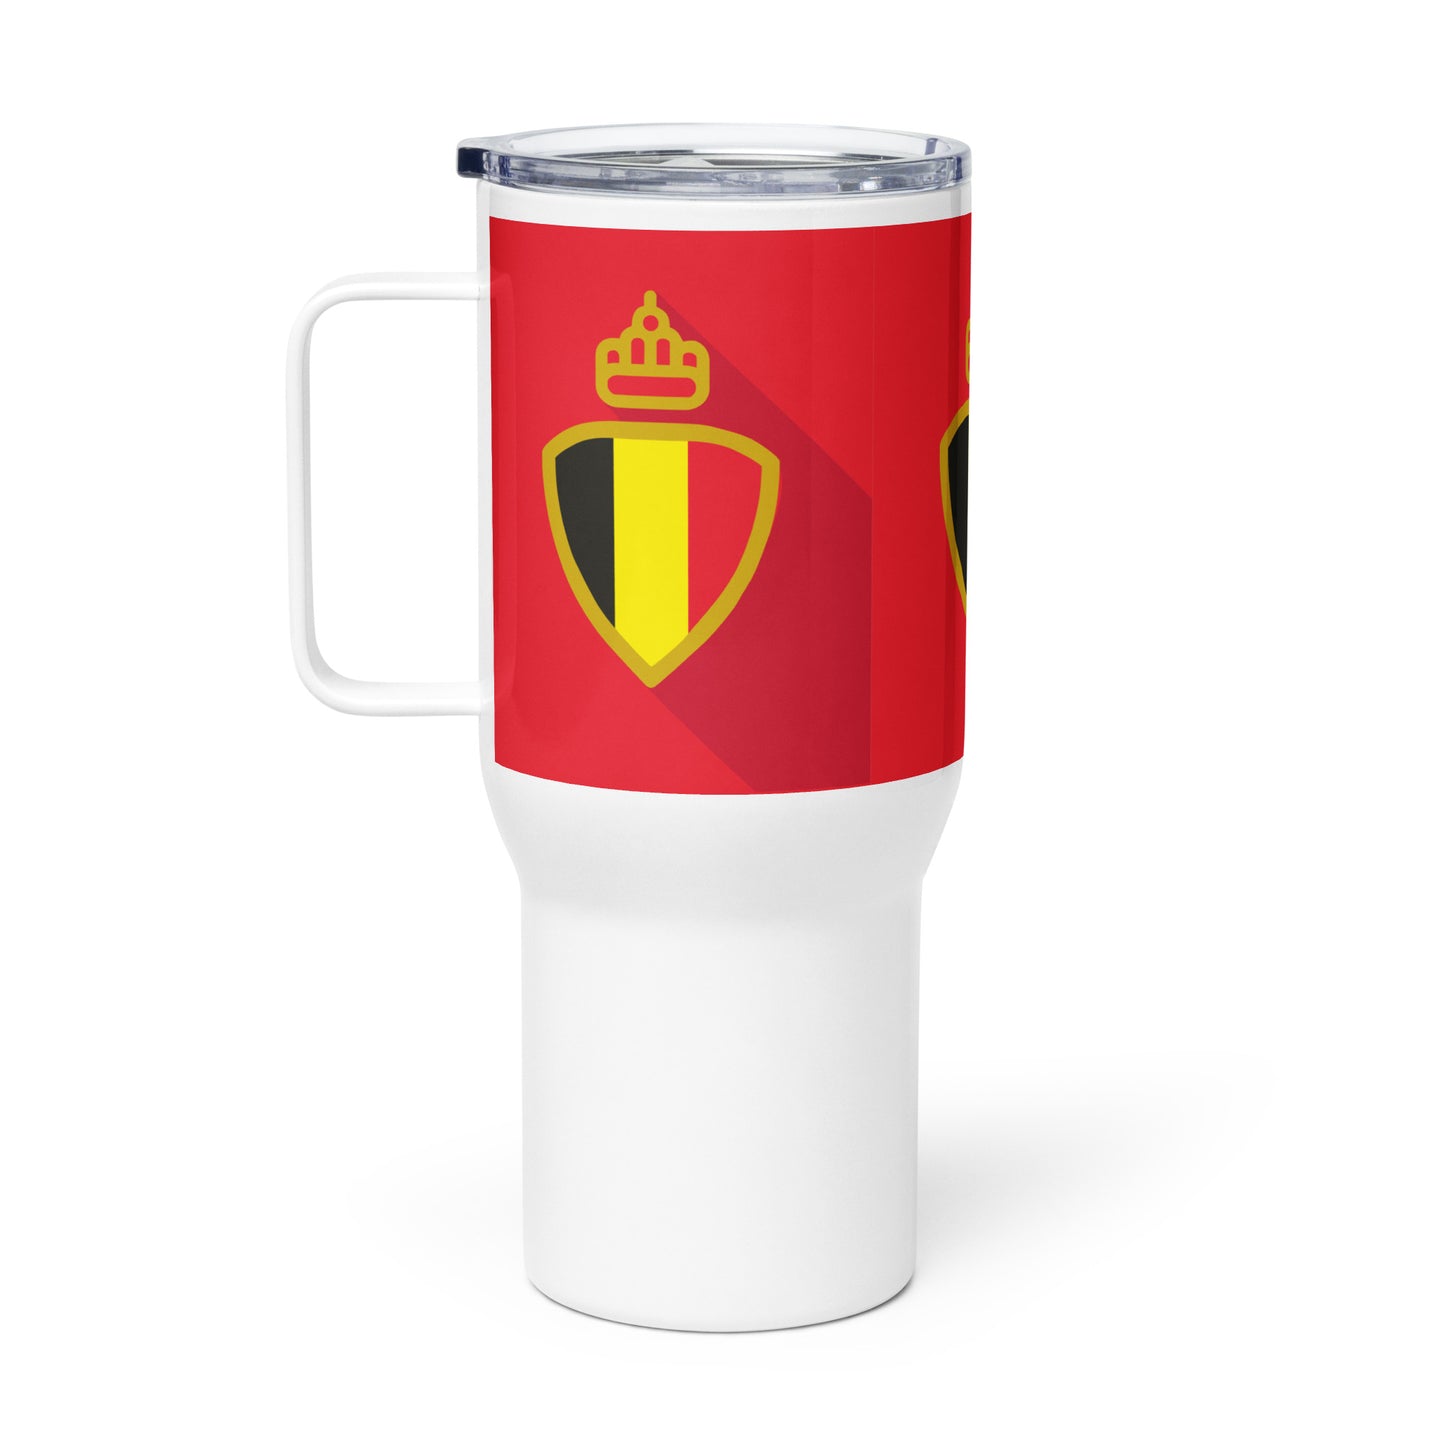 Belgium Travel mug with a handle